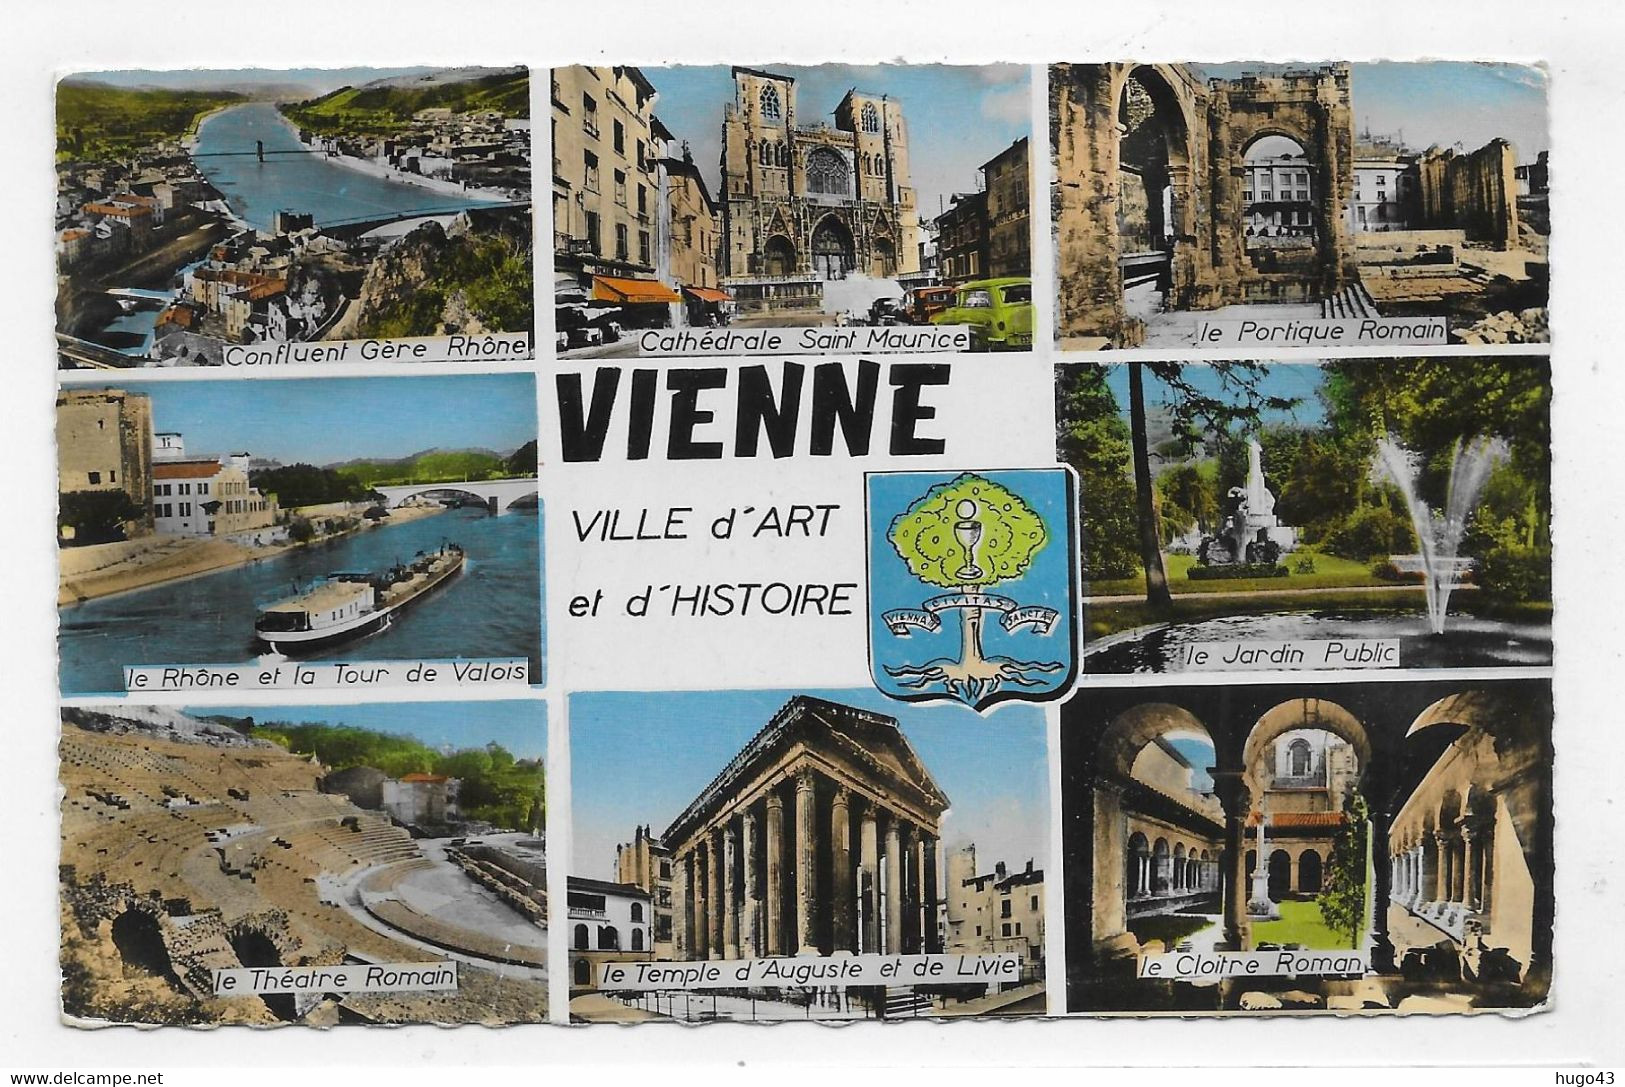 VIENNE EN 1962 - N° 37380 - MULTIVUES - PLIS VERTICAUX - FORMAT CPA VOYAGEE - Vienne